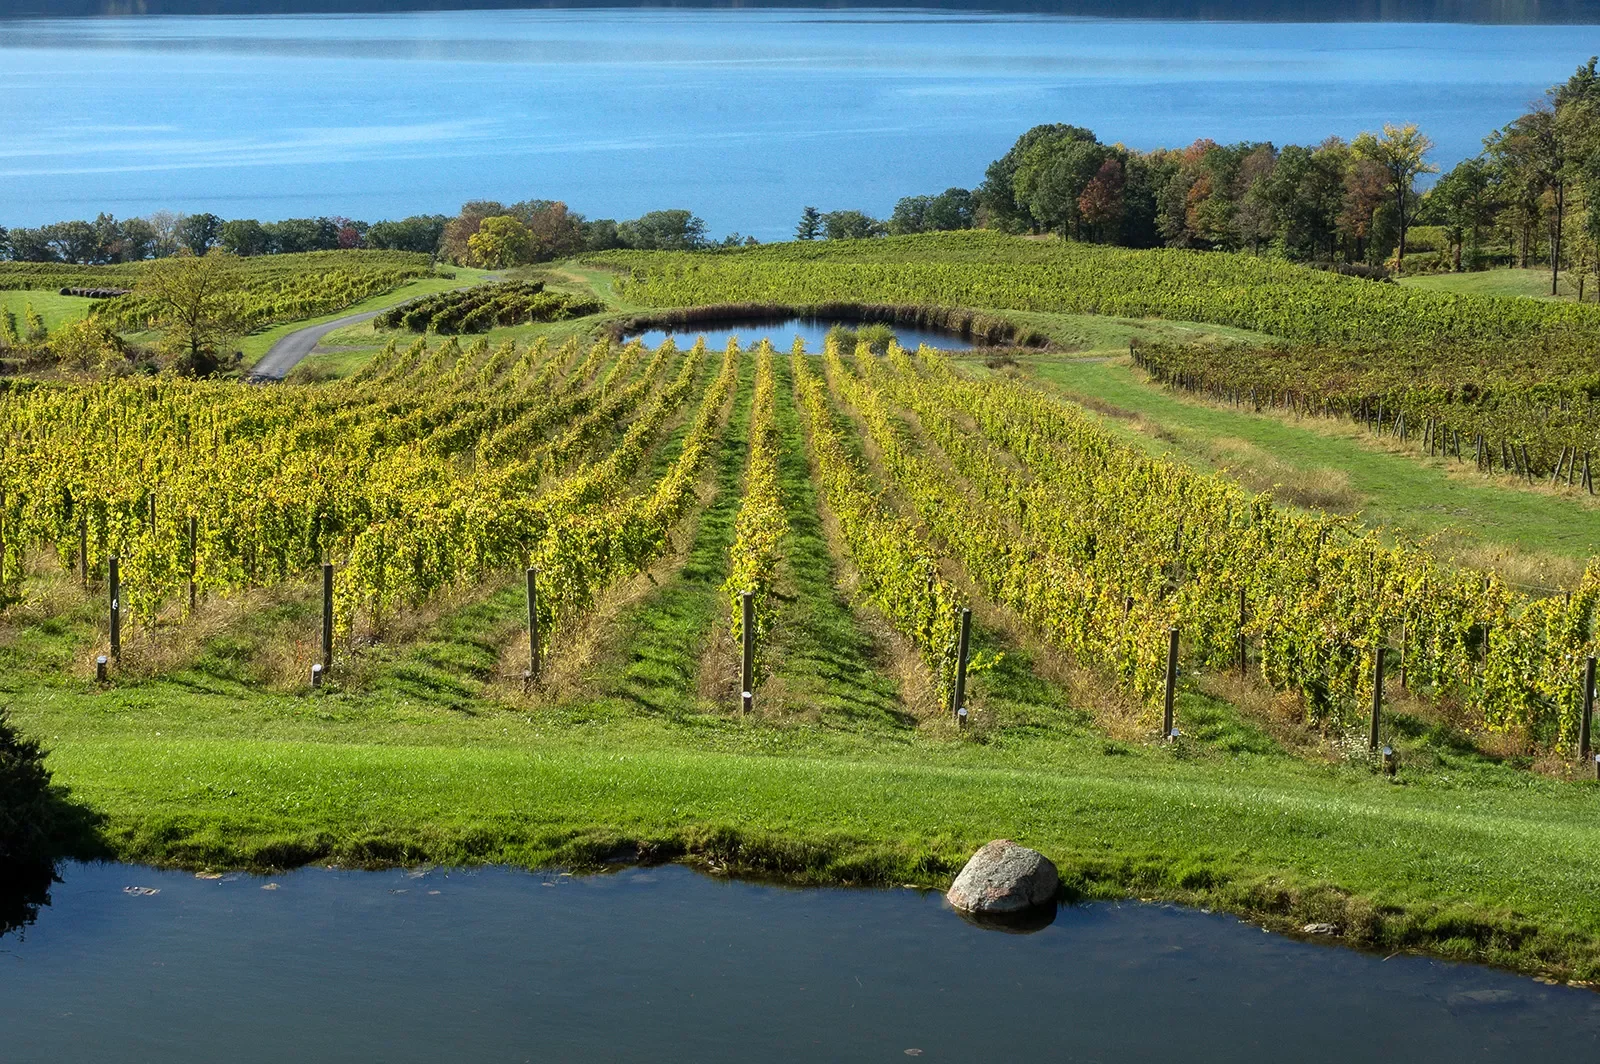 Wide shot of vineyard, river in background.